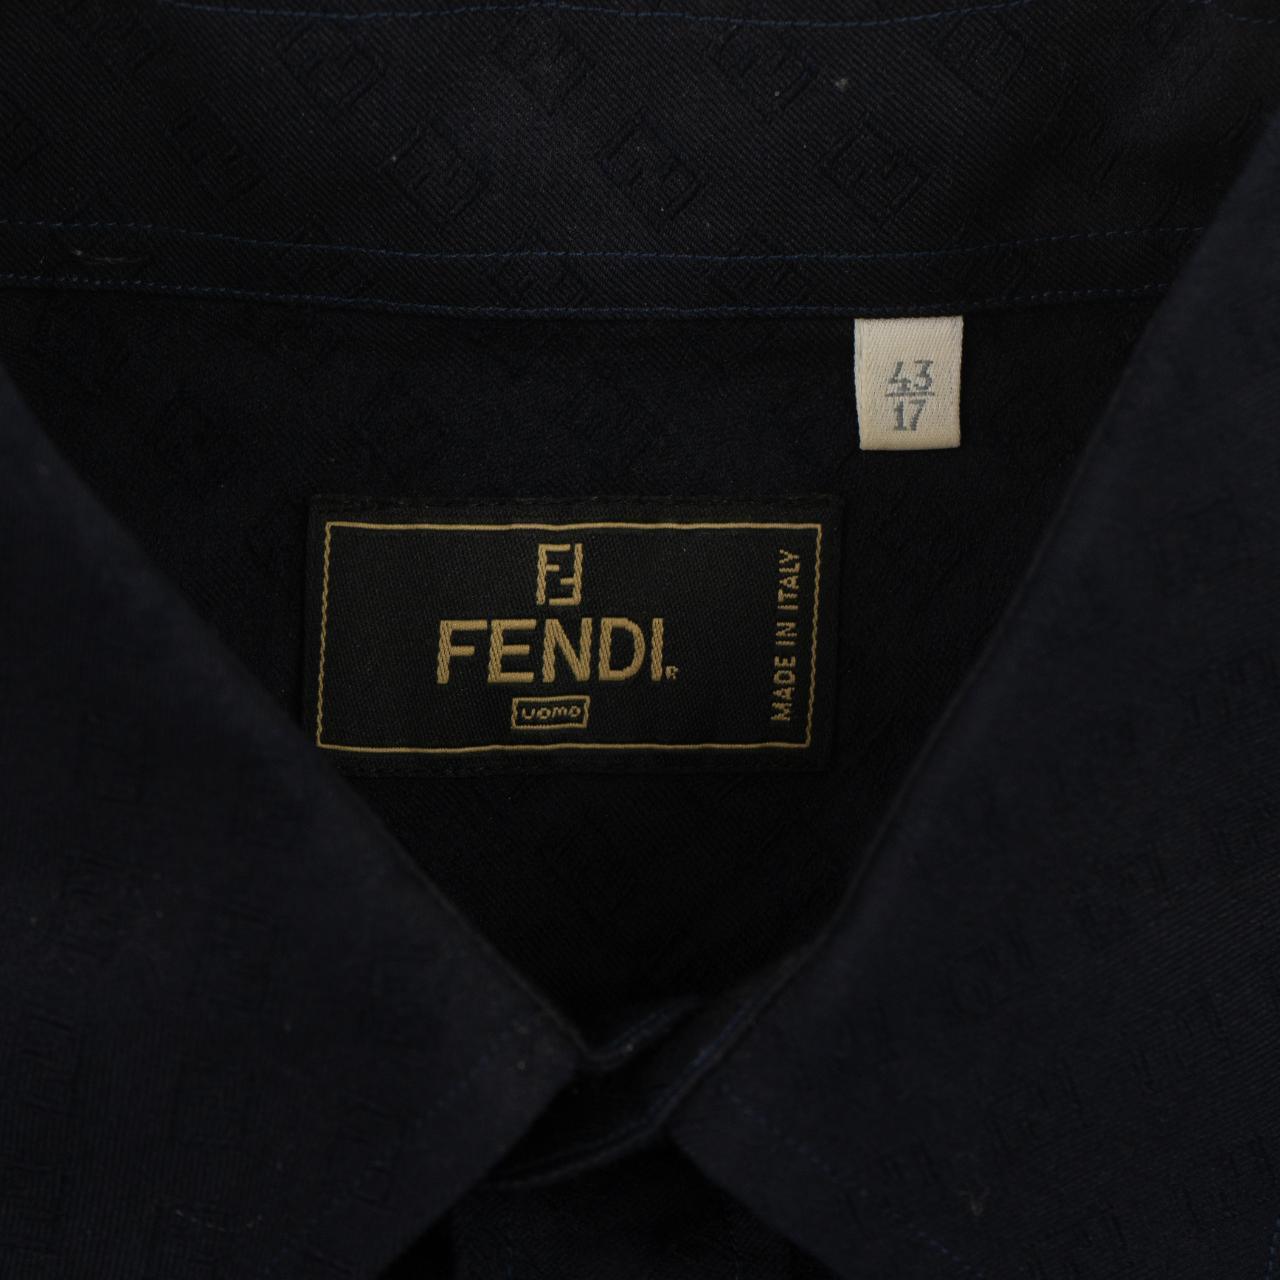 Vintage Fendi Monogram Button Shirt Size L - Known Source